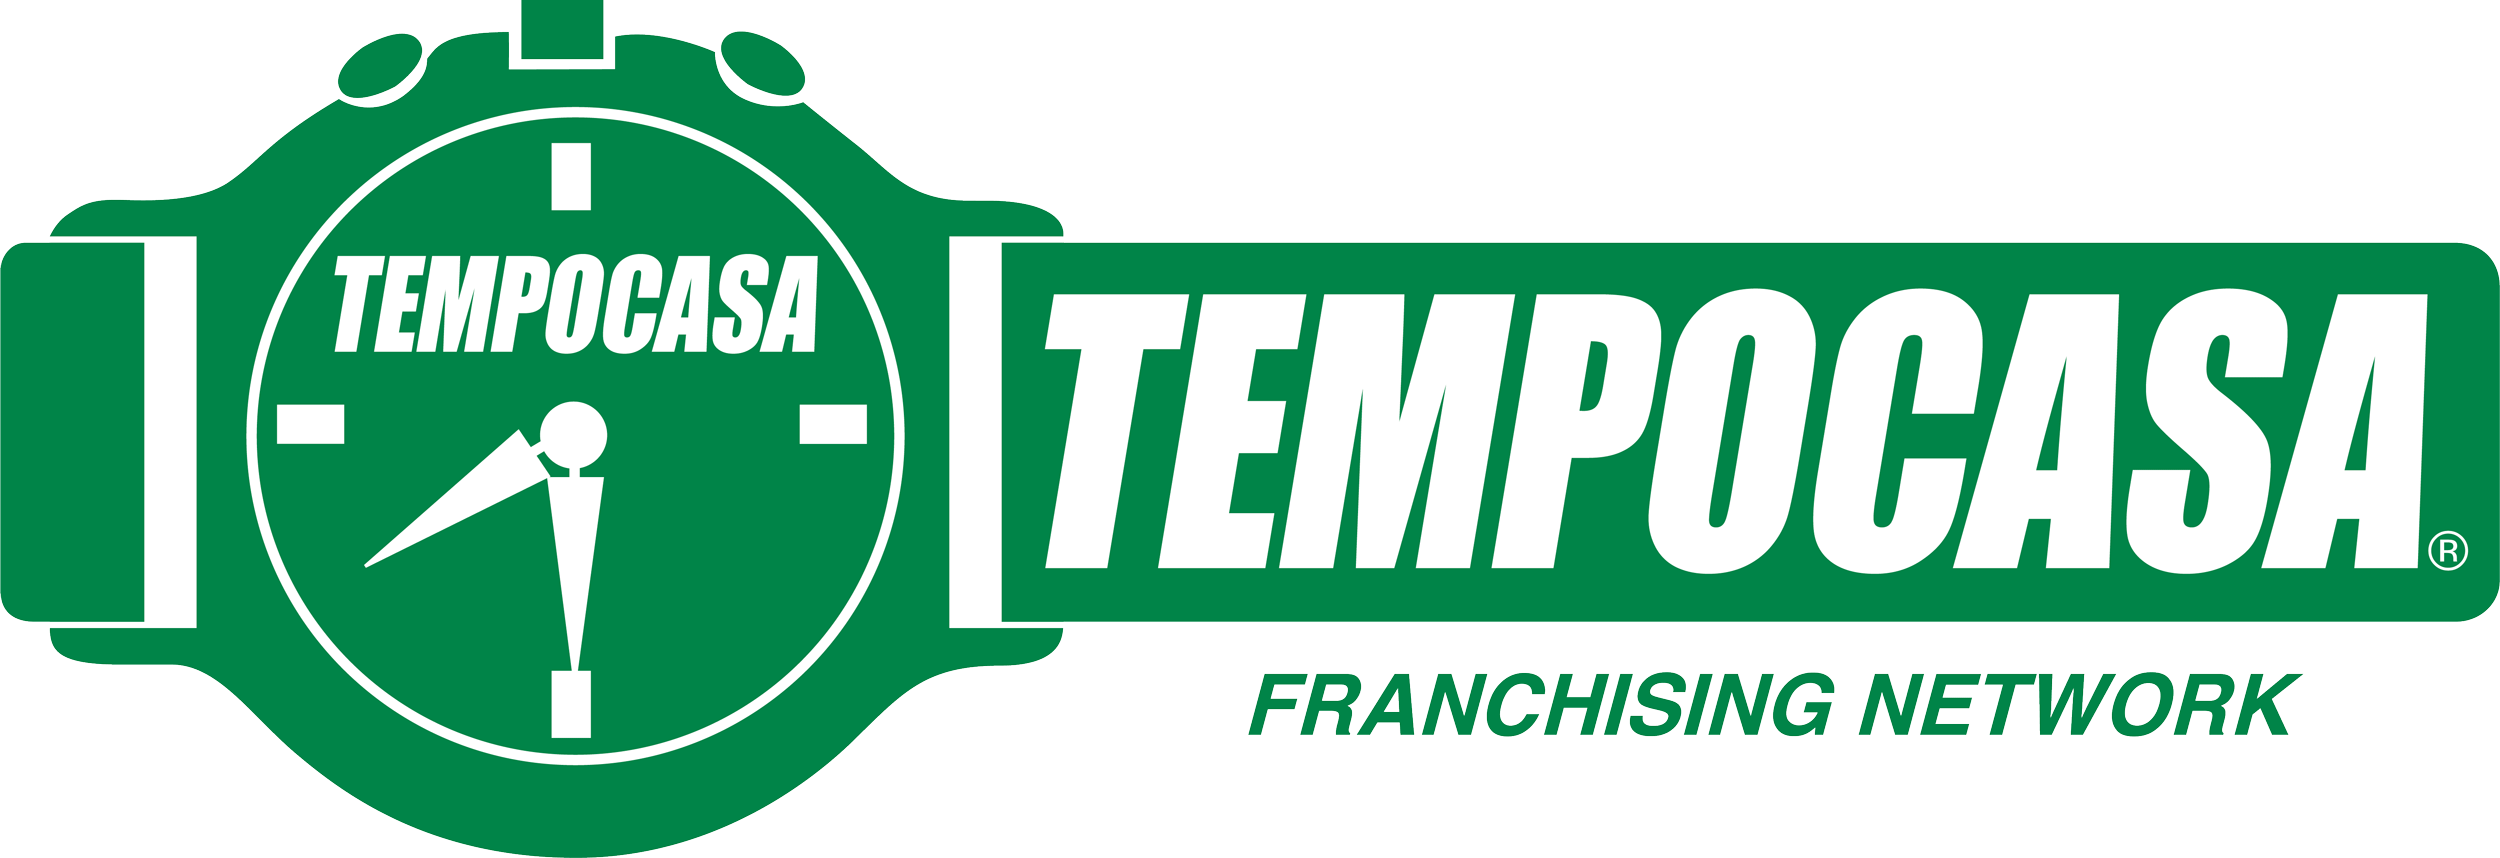 Biella - Tempocasa